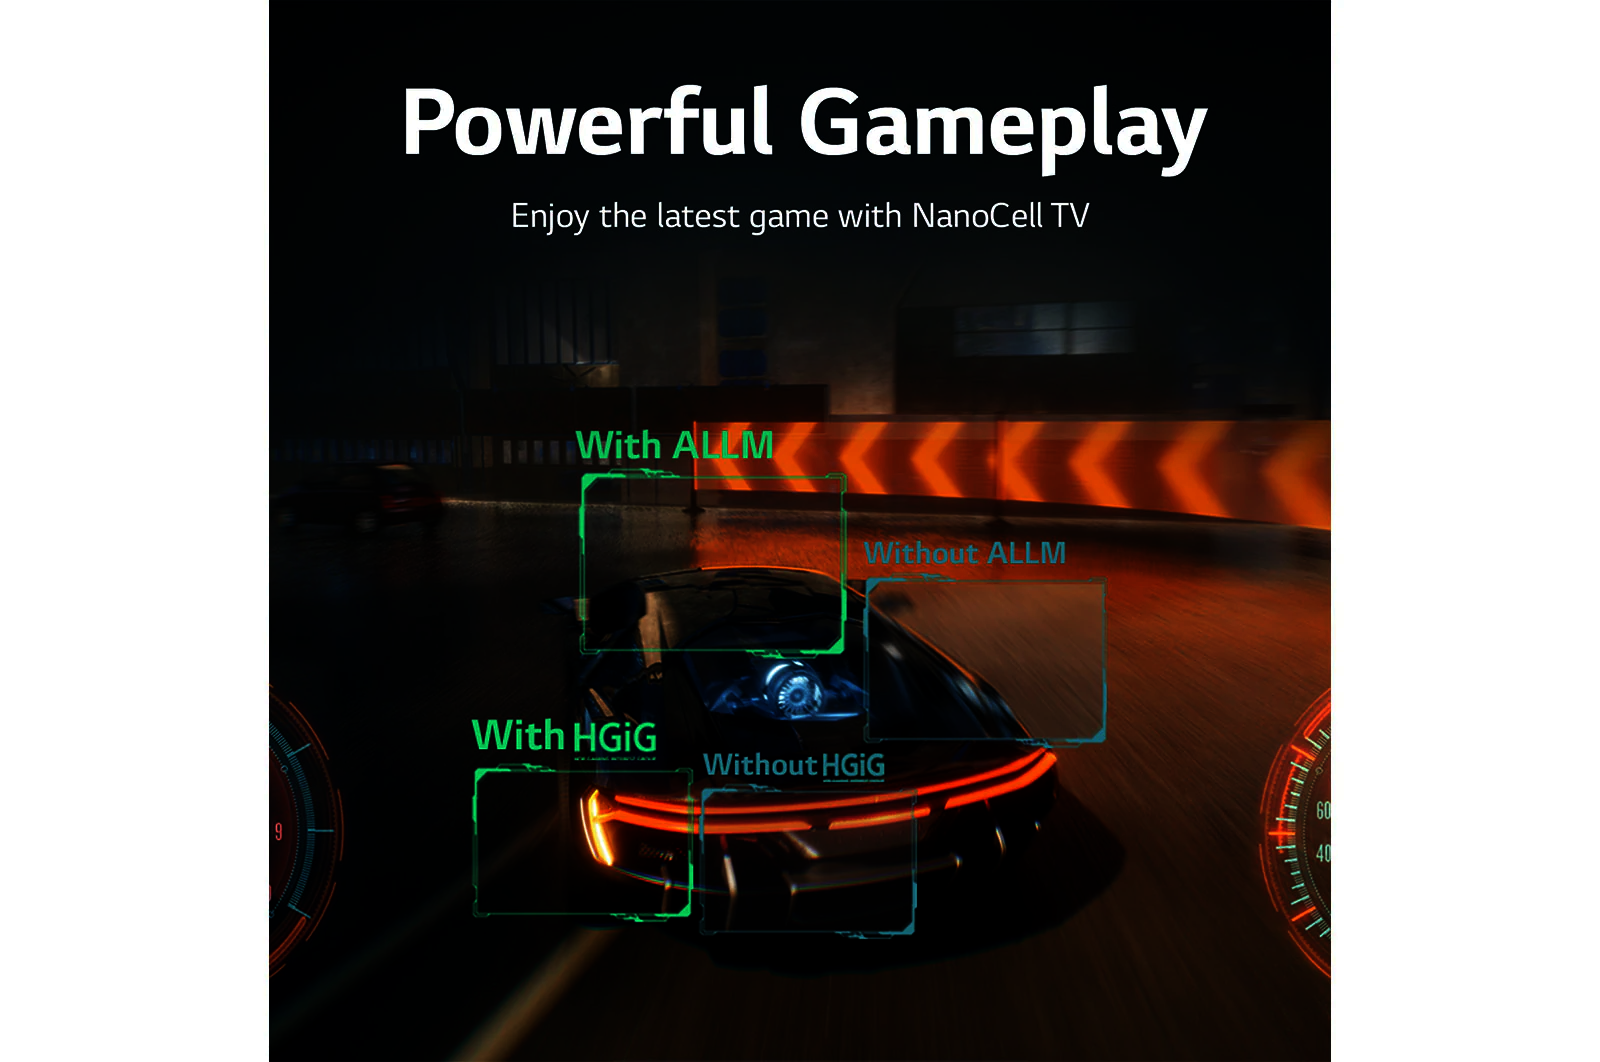 LG 65 Inch NanoCell NANO79 Series UHD 4K Smart TV